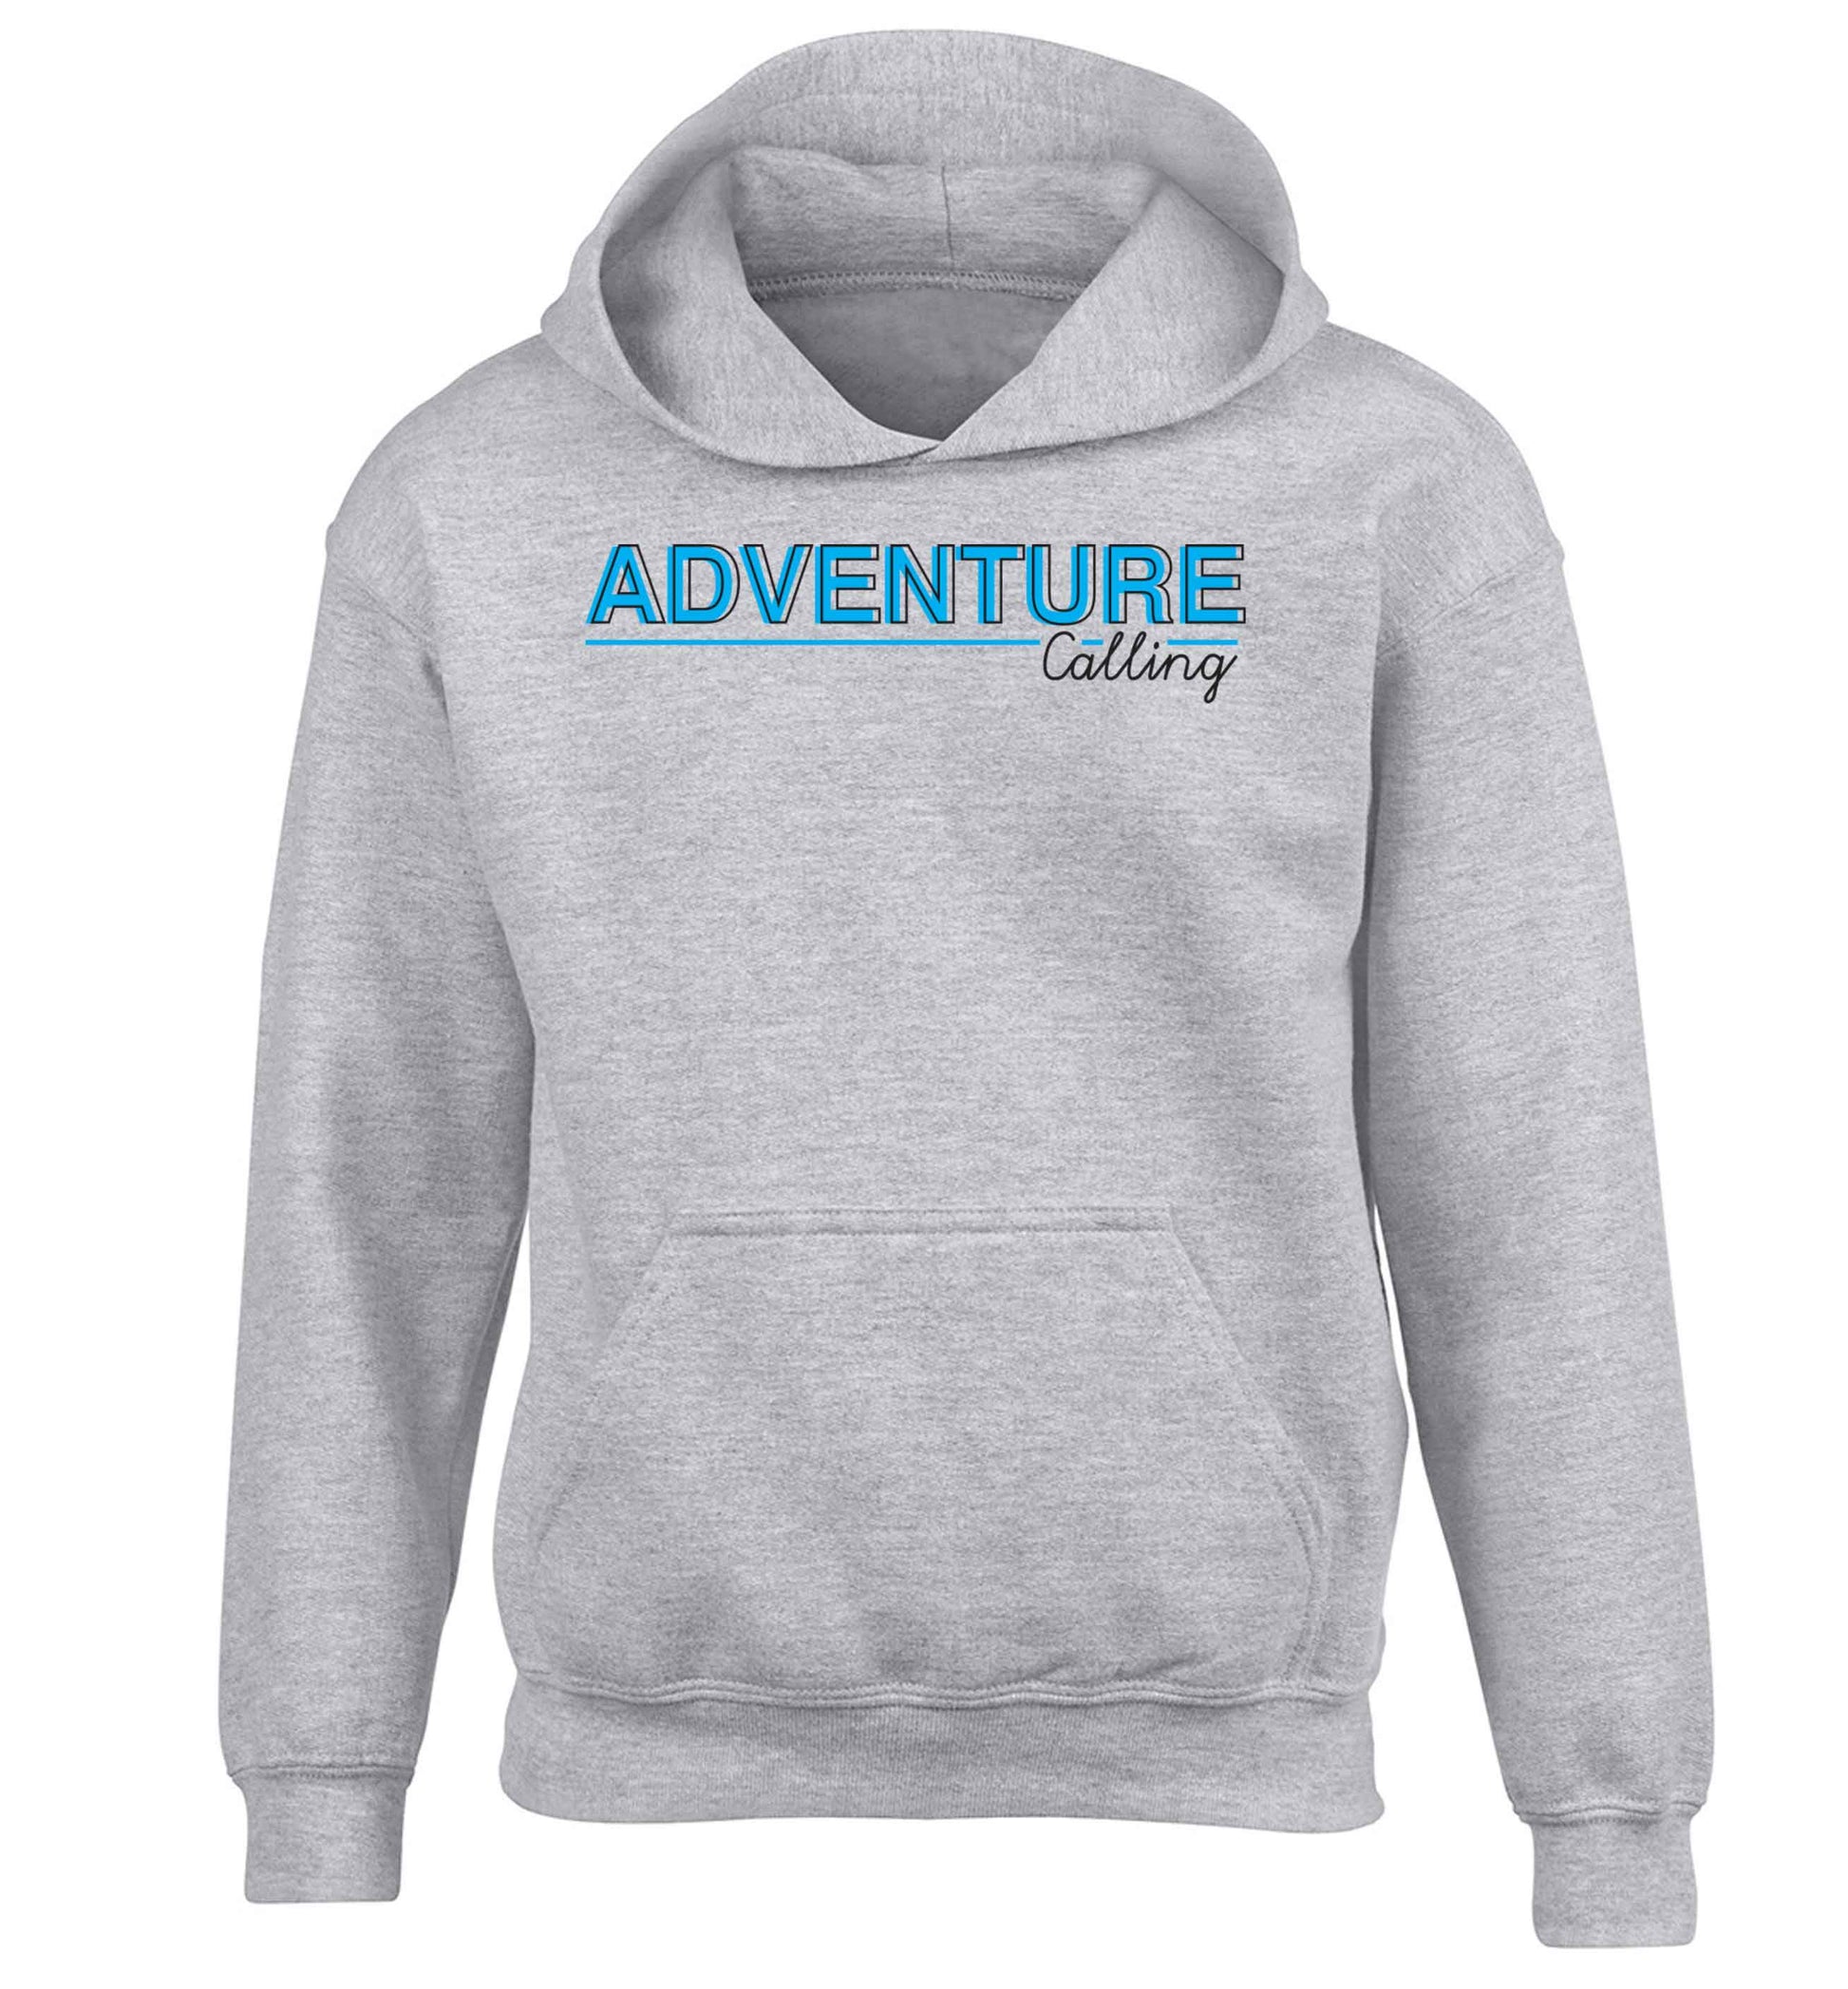 Adventure calling children's grey hoodie 12-13 Years